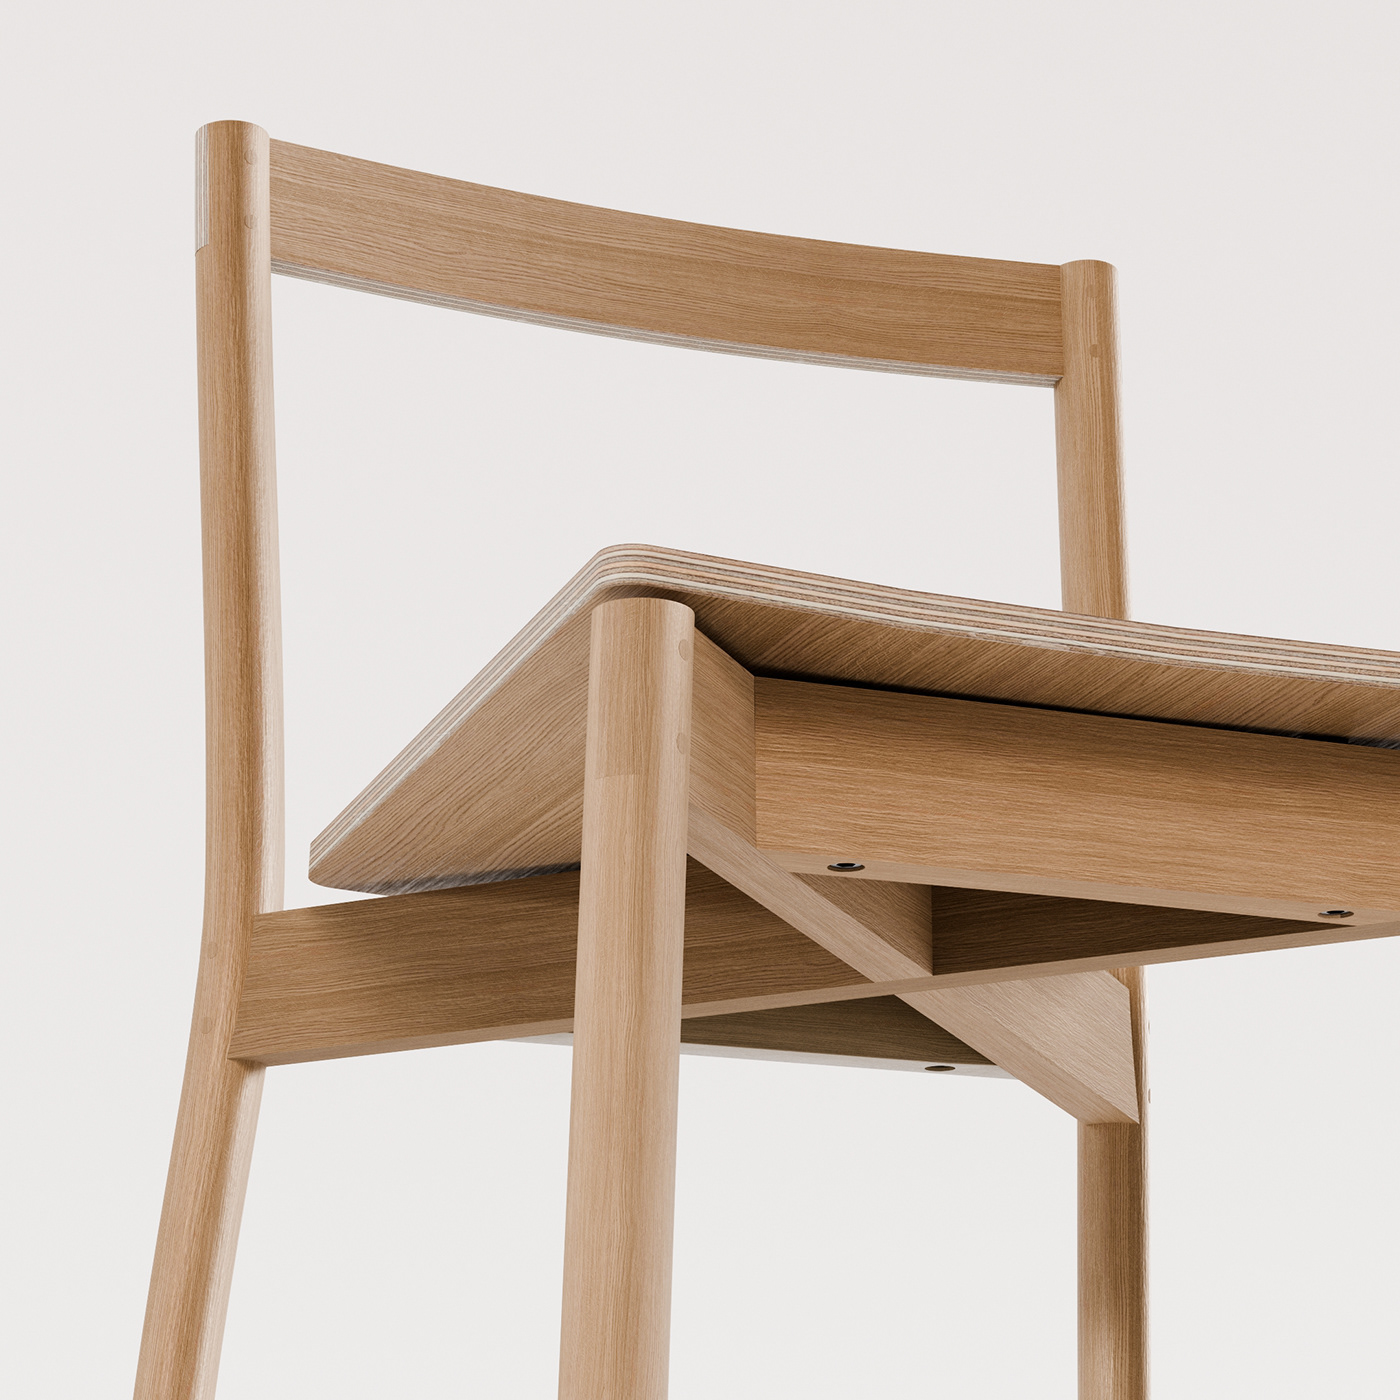 design furniture product design  wood chair industrial design  Render interior design  minimal dining